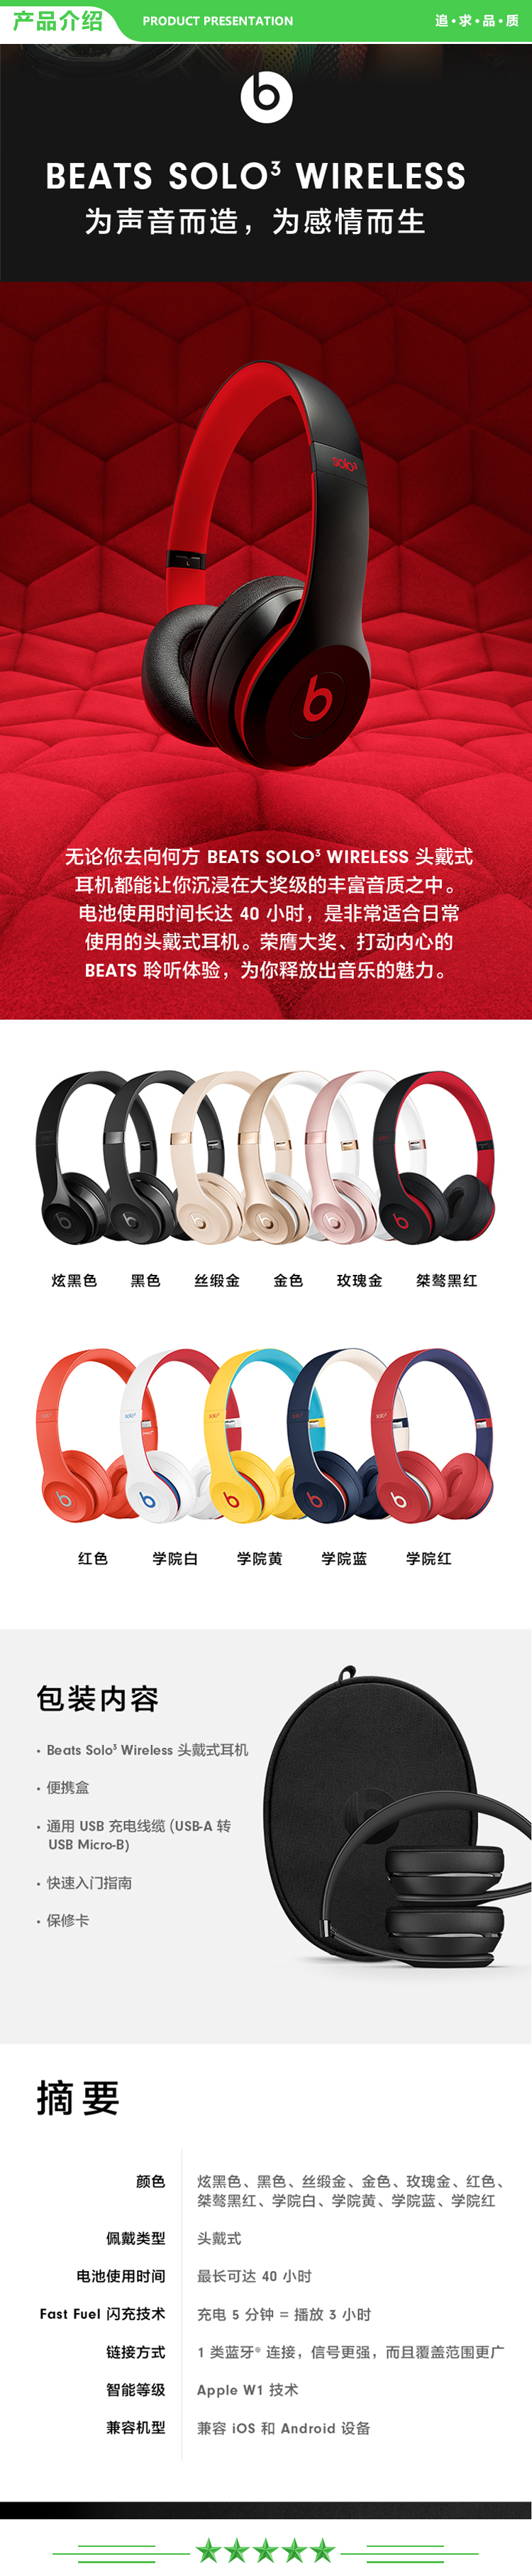 Beats Solo3 Wireless 红色 头戴式 蓝牙无线耳机 手机耳机 游戏耳机 .jpg